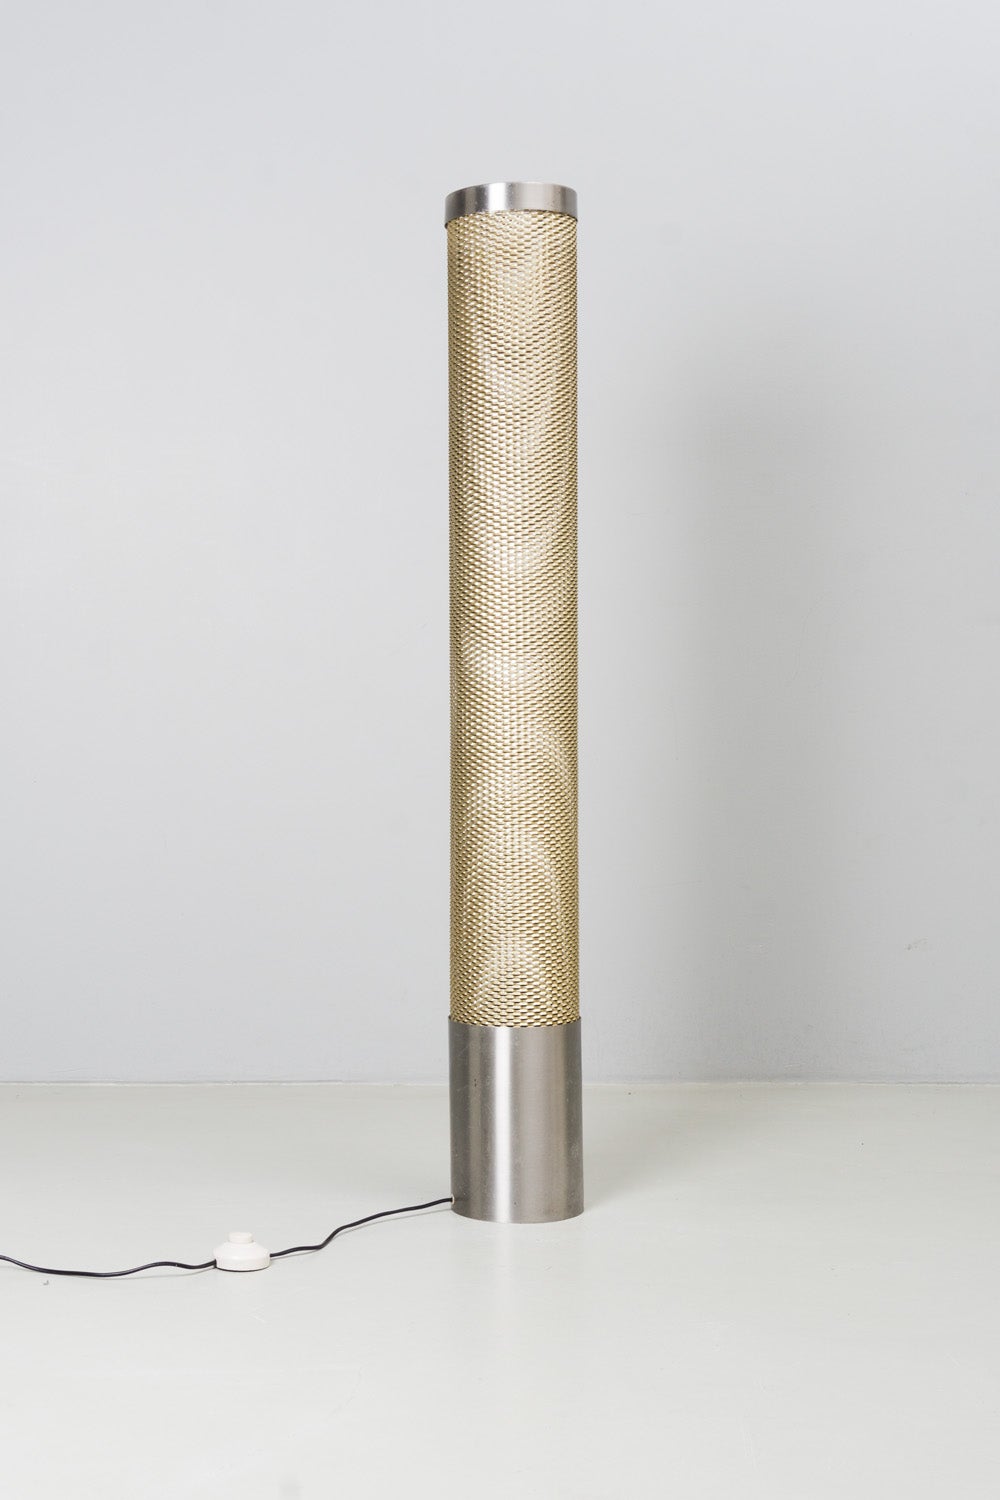 Beautiful and minimalistic Floor Lamp designed by Gio Ponti for Reggiani with an orange-bronze, perforated Aluminium diffuser. Very beautiful, harmonious light.


Giovanni 